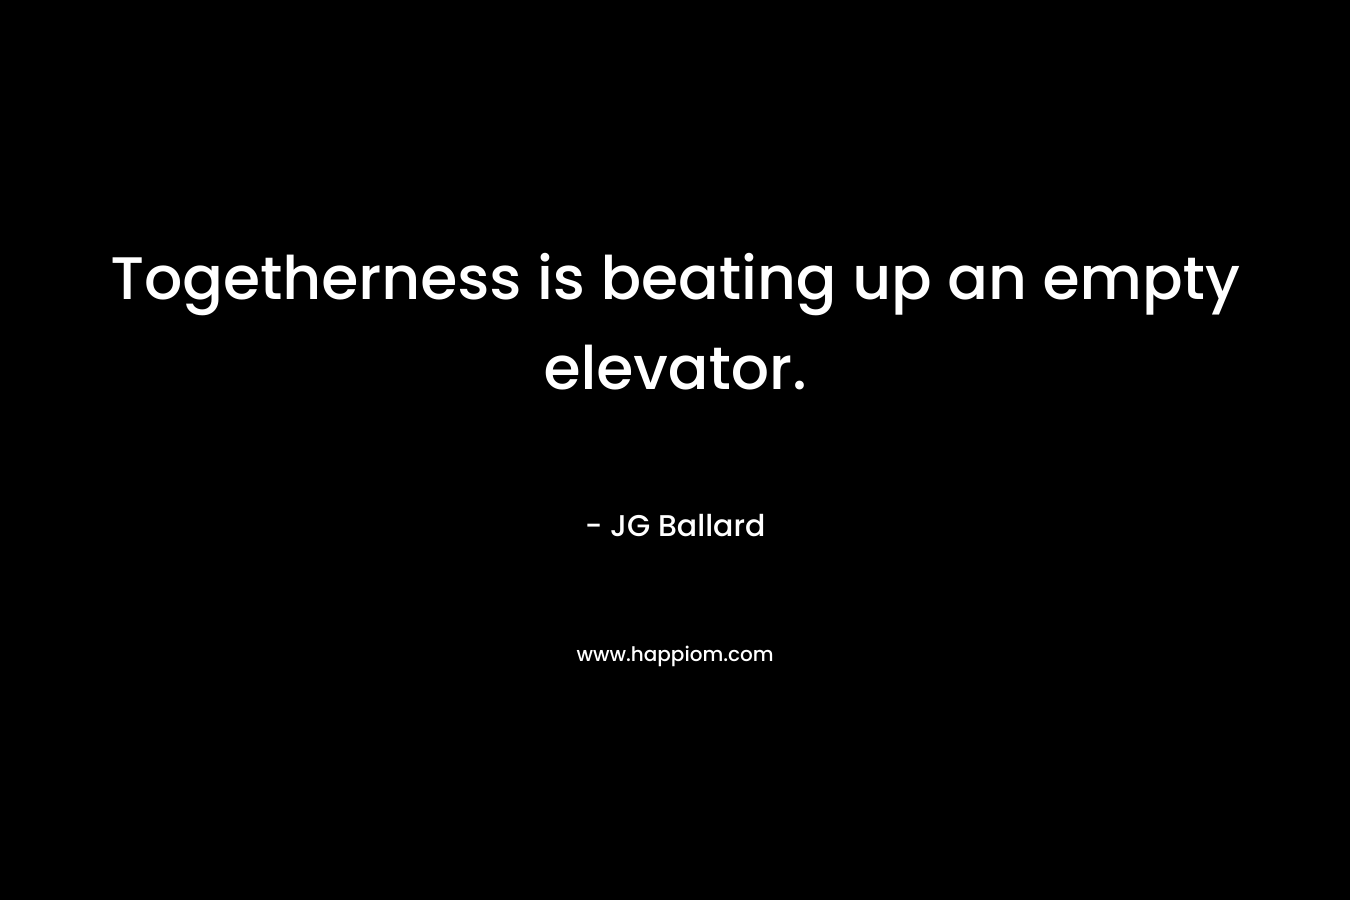 Togetherness is beating up an empty elevator. – JG Ballard